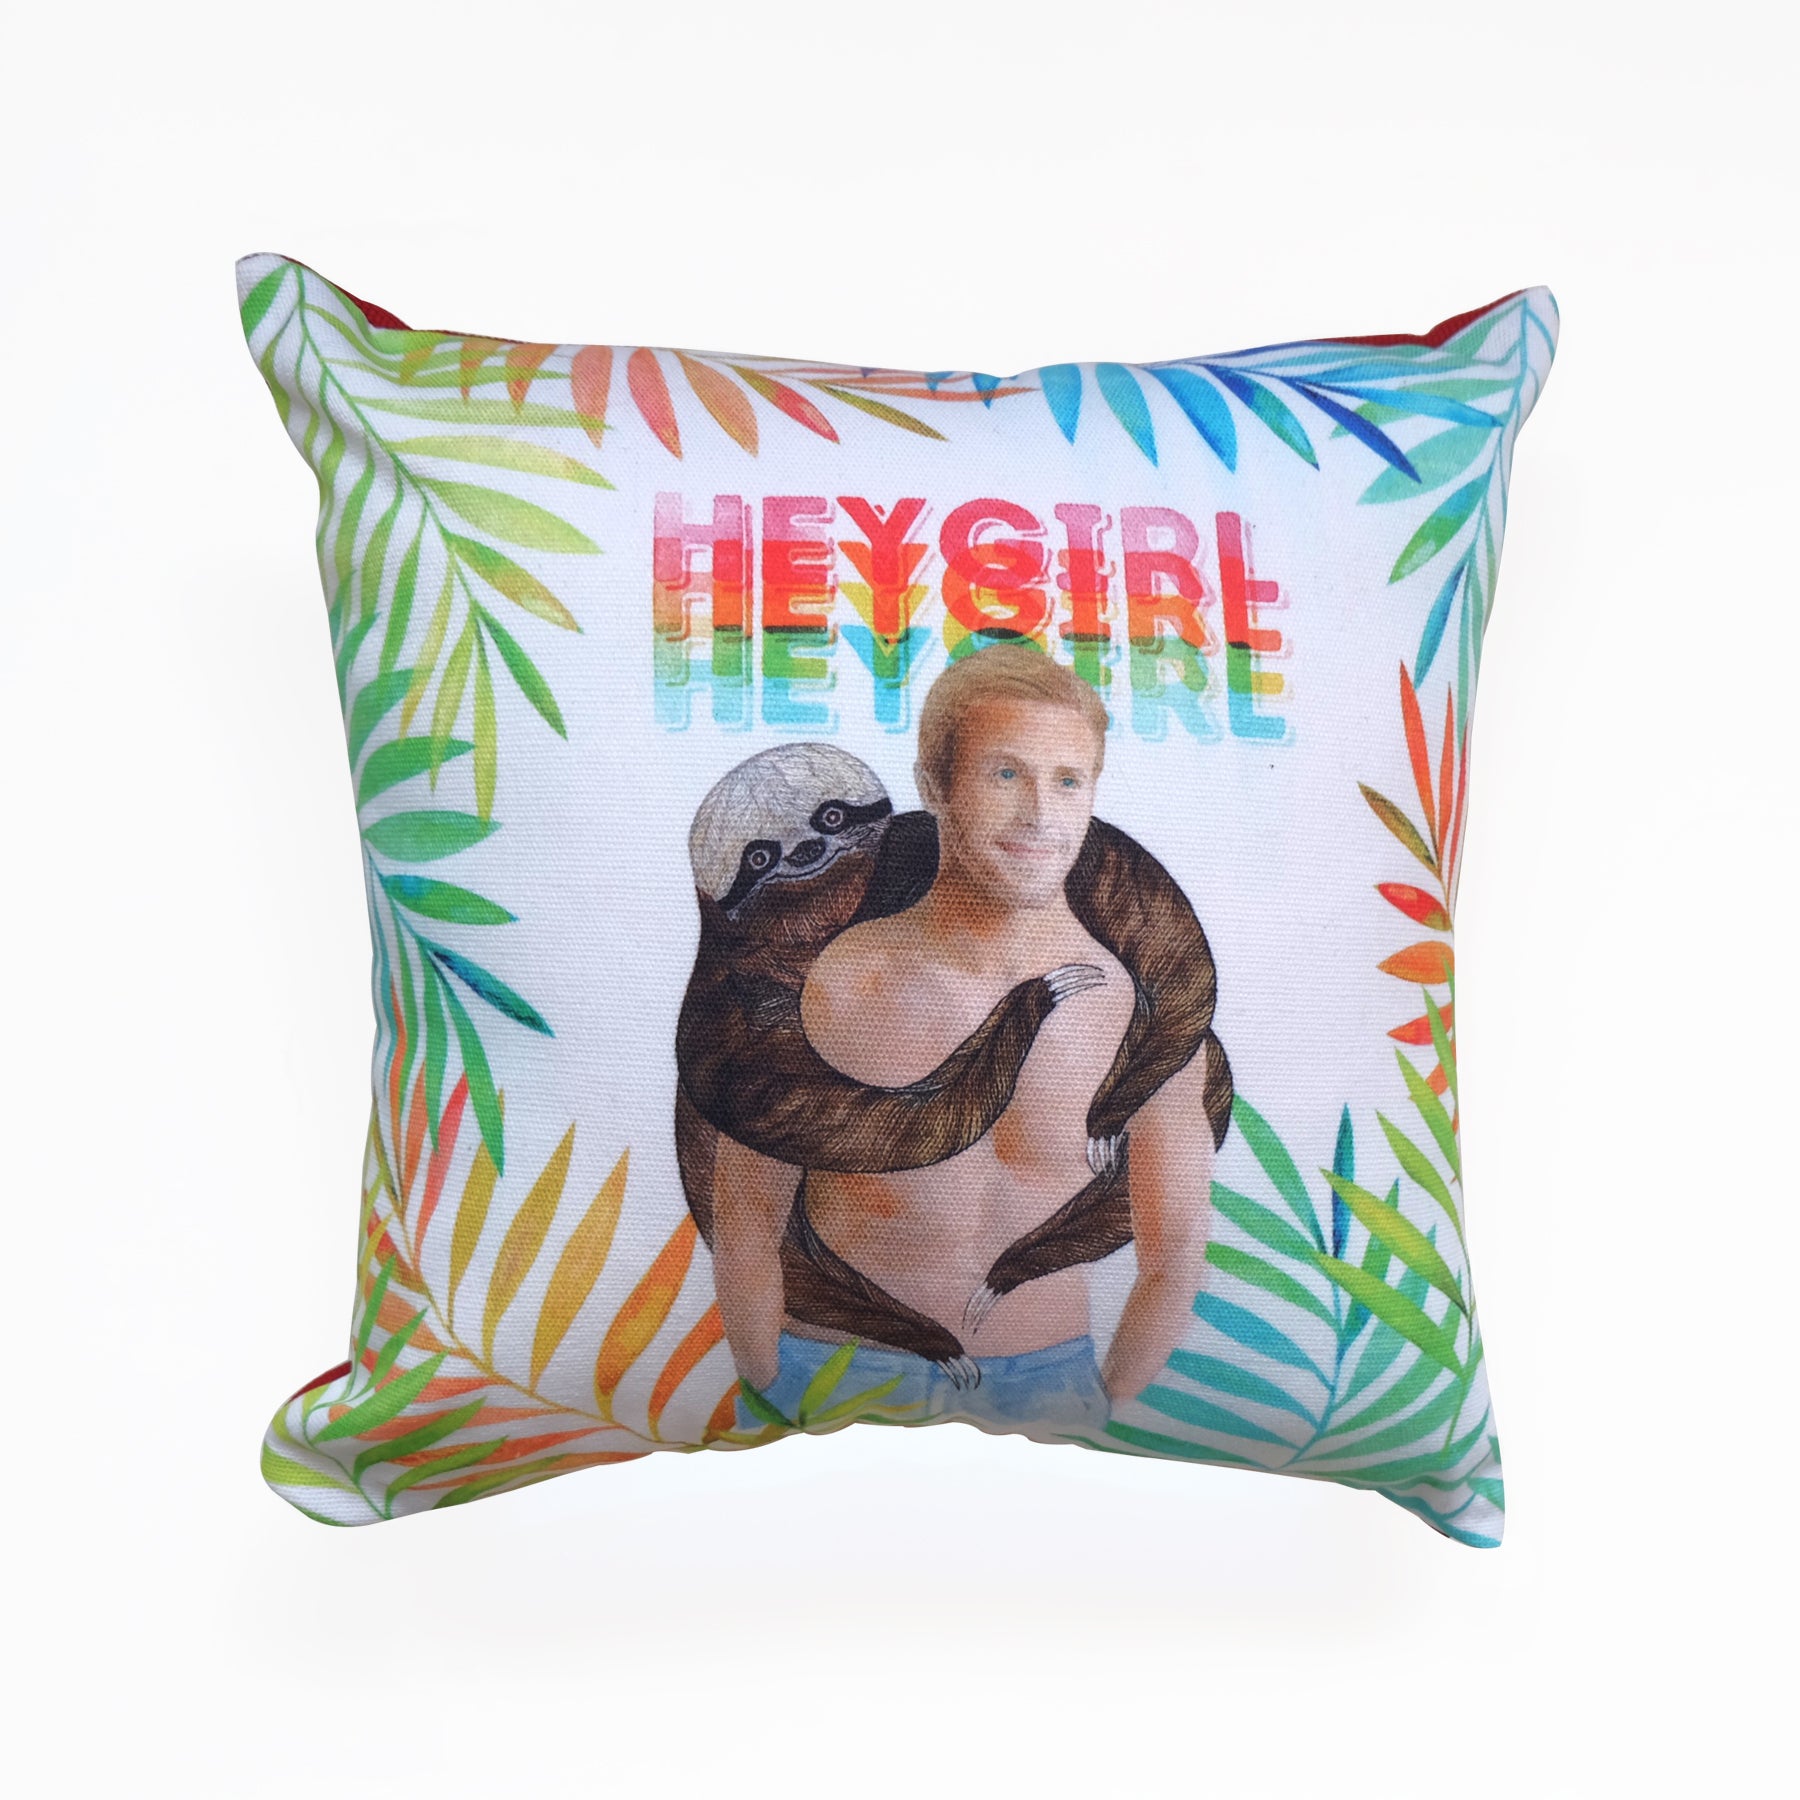 Ryan Gosling Throw Pillows for Sale - Fine Art America